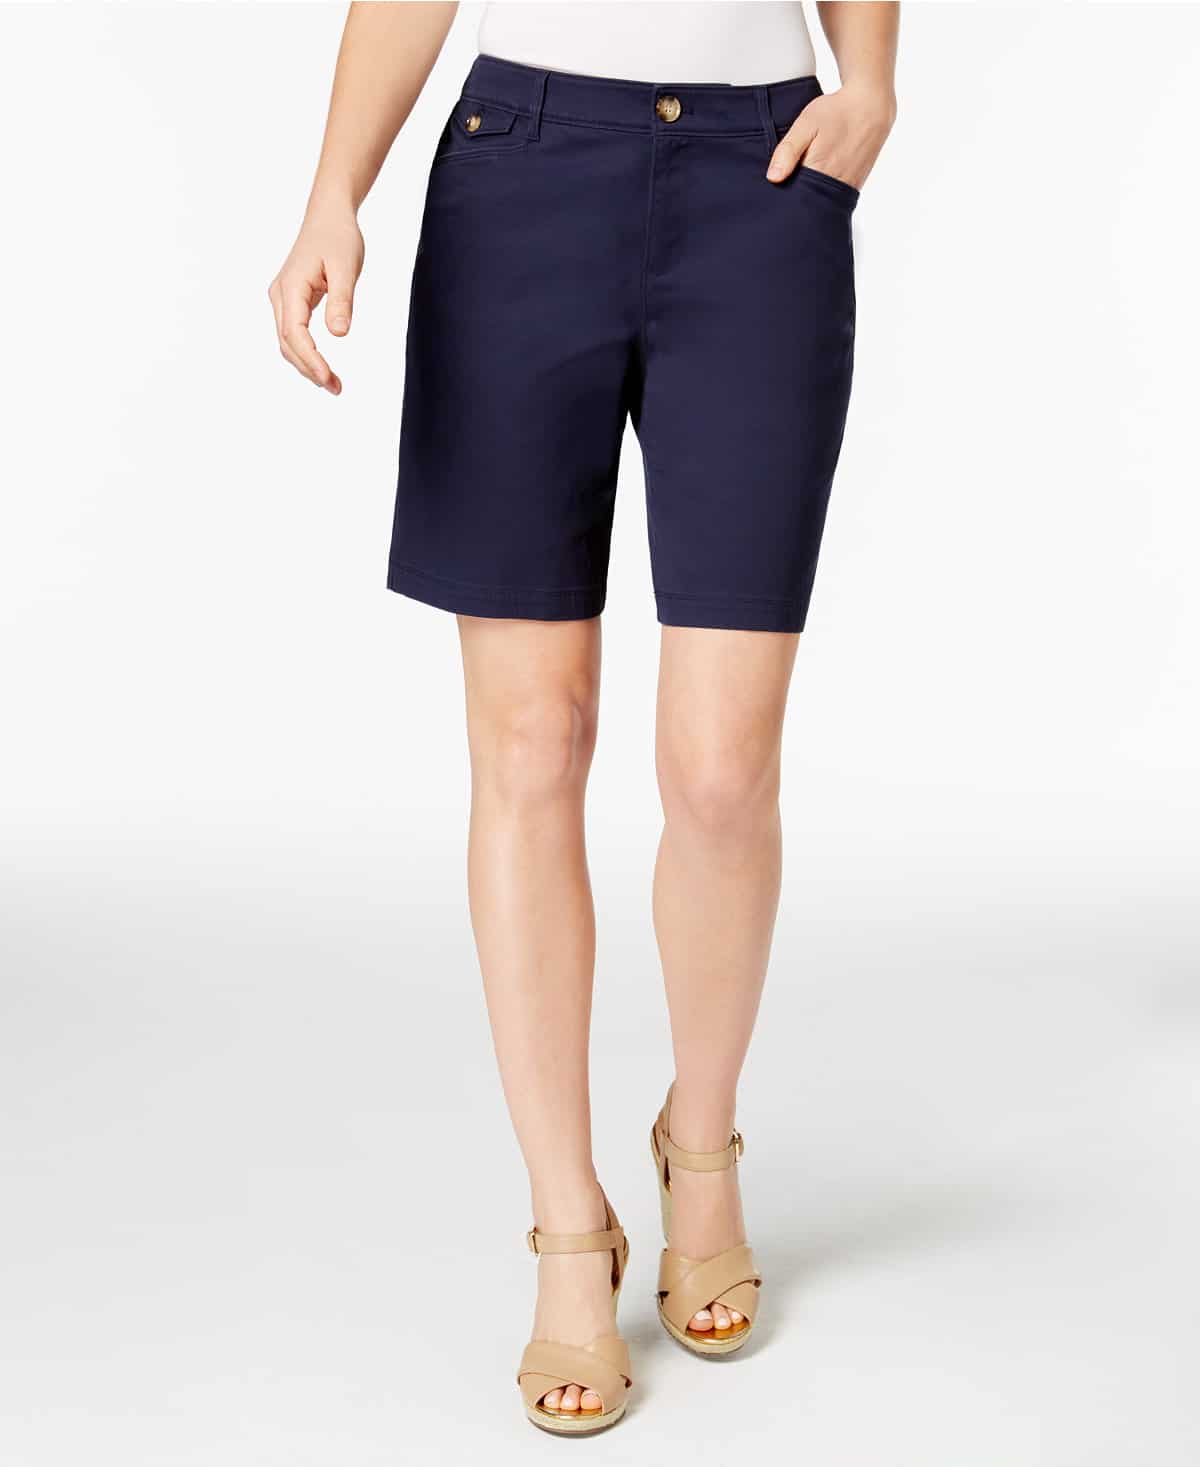 Mid-length shorts in navy from Macy's